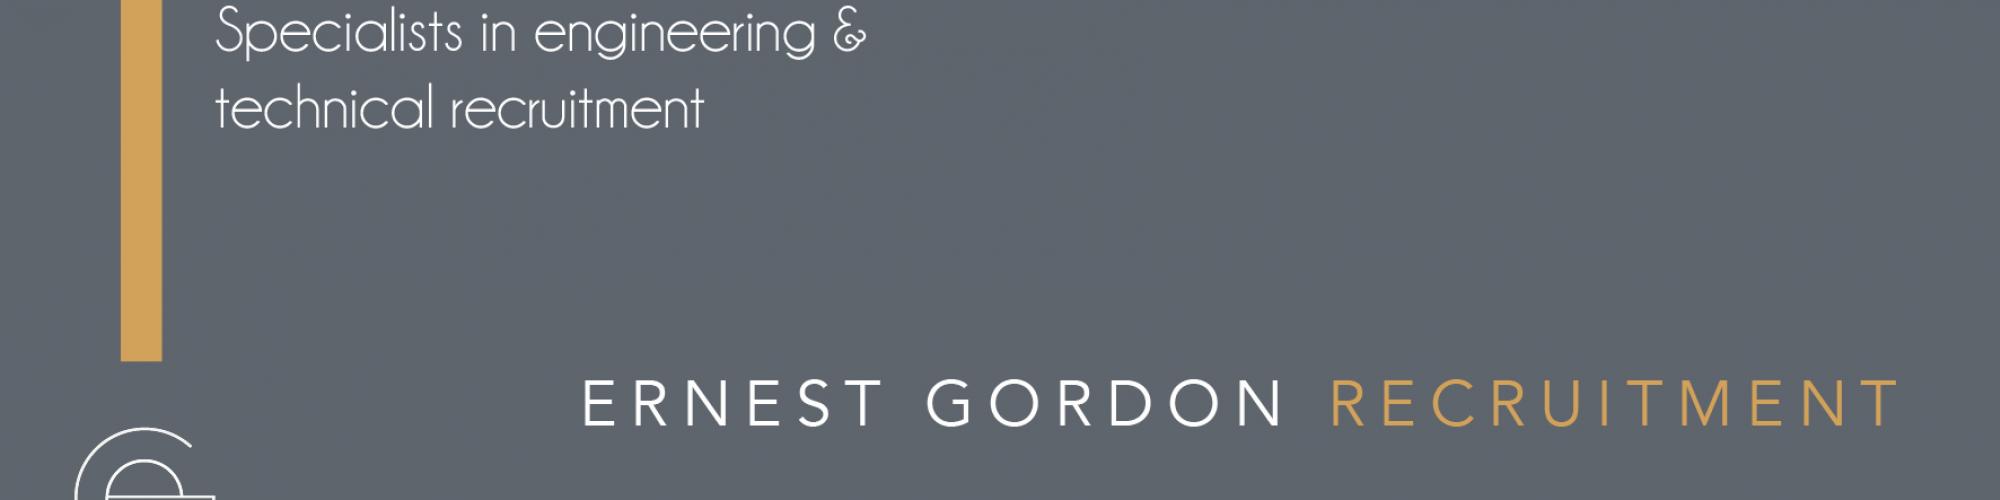 Ernest Gordon Recruitment cover image